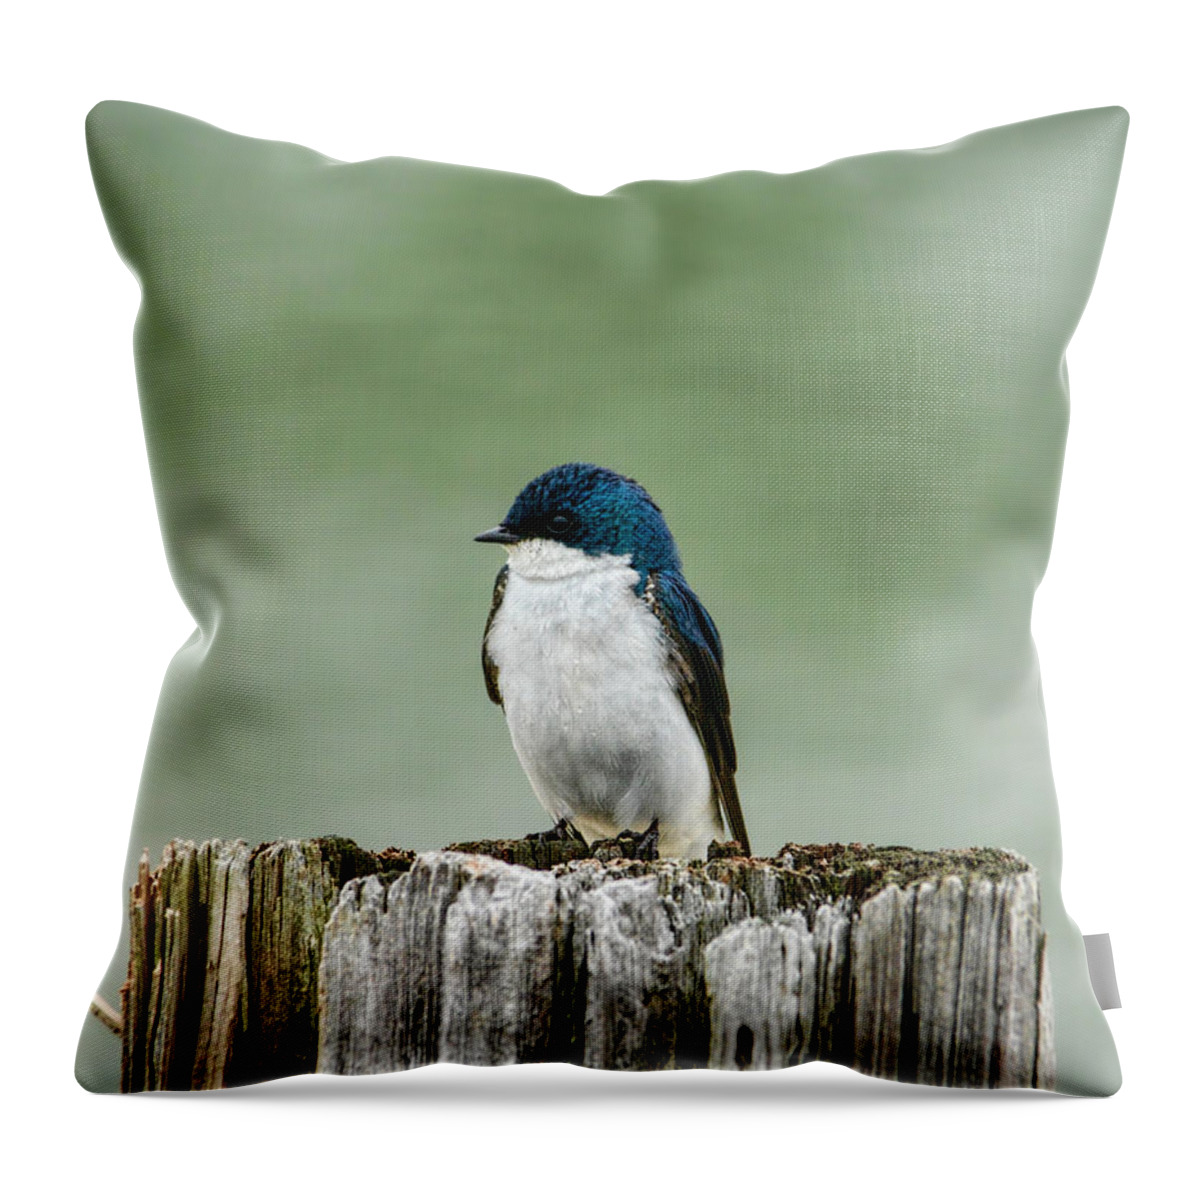 Bird Throw Pillow featuring the photograph Resting Swallow by Jai Johnson